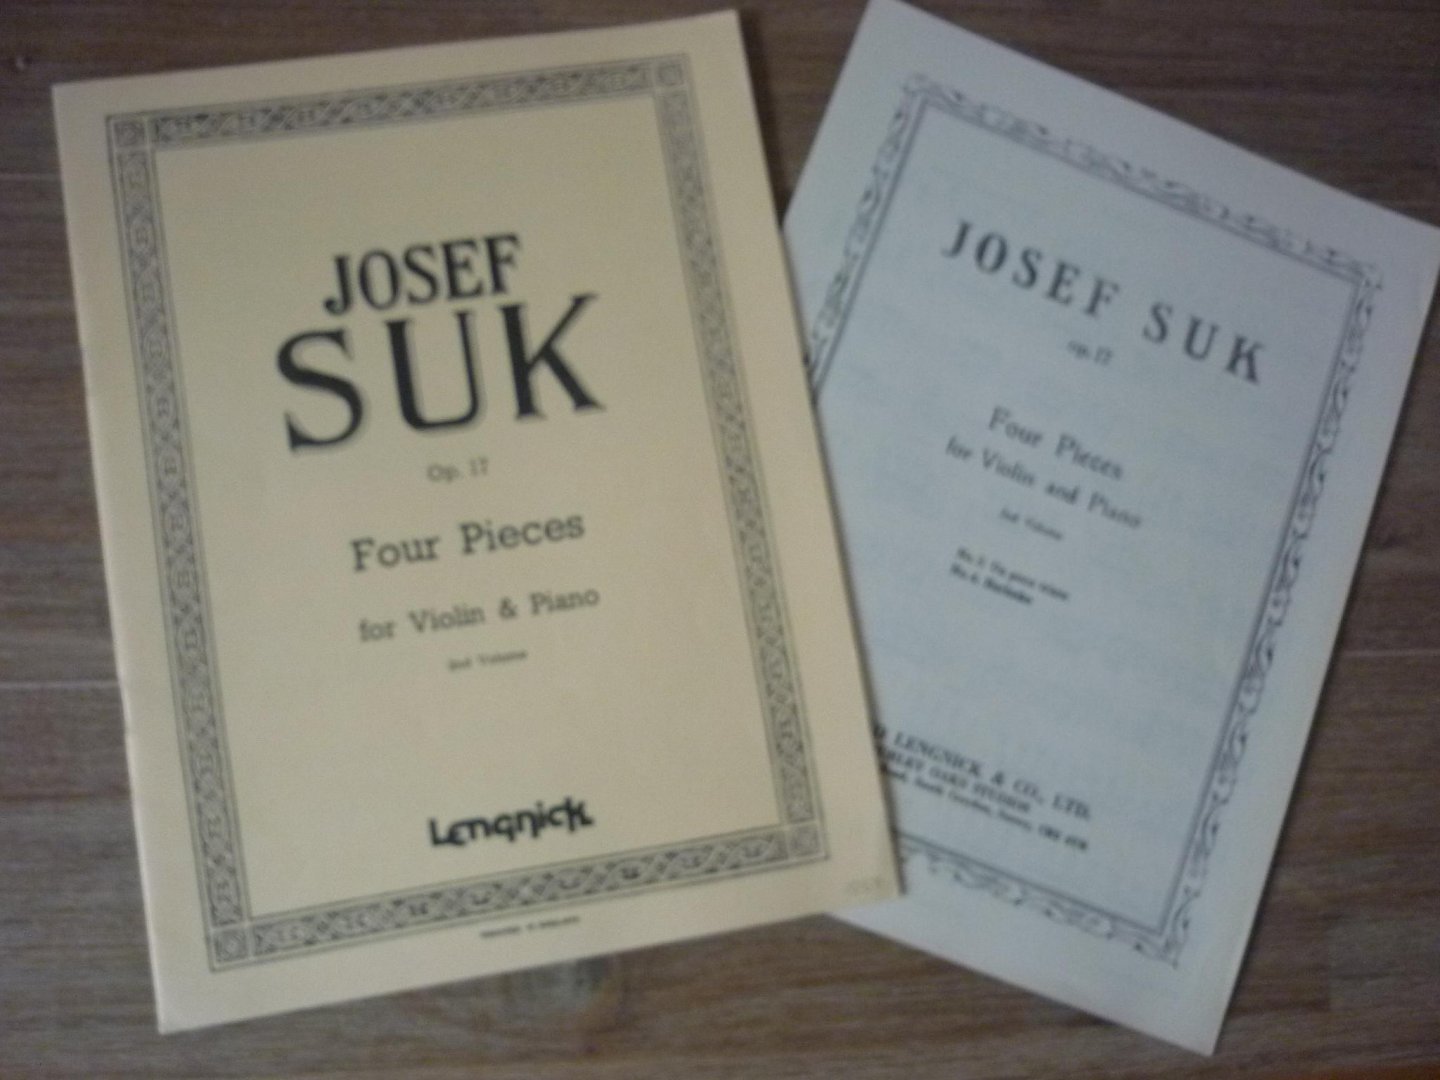 Suk; Josef - Four pieces for violin and piano. Op. 17 - 2st volume; (No. 3: Un poco triste + No 4: Burleske)